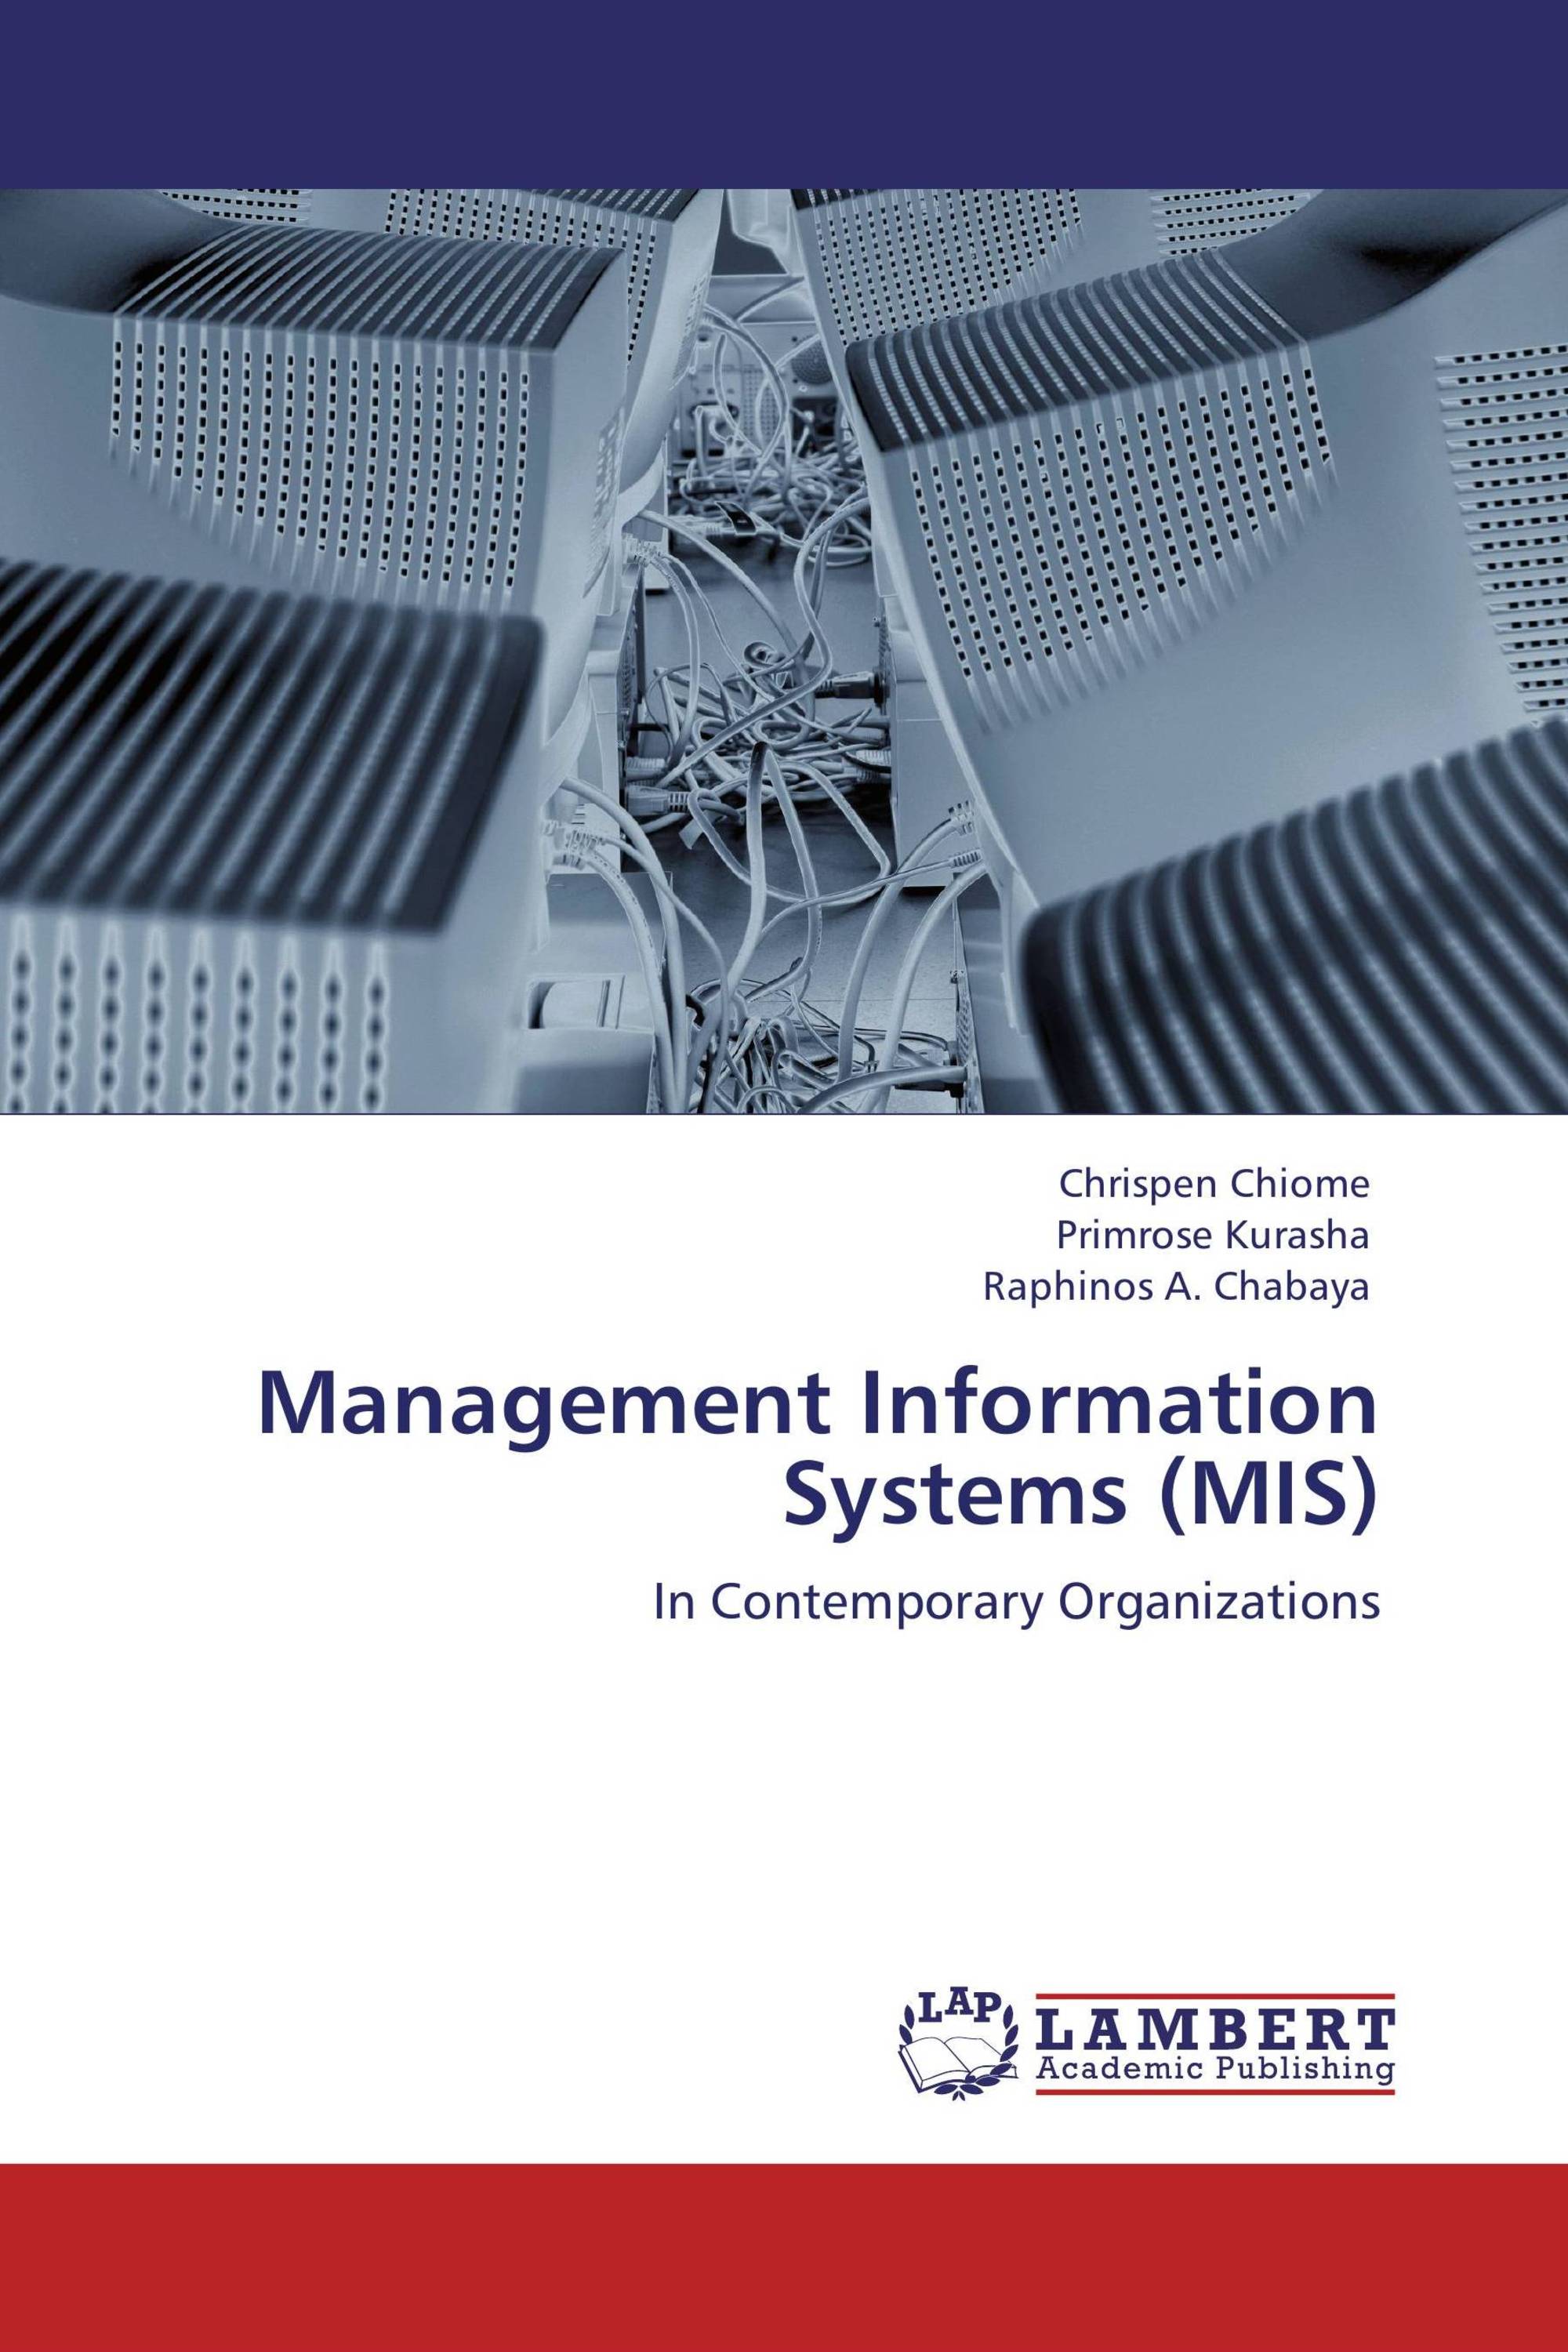 management information system term paper